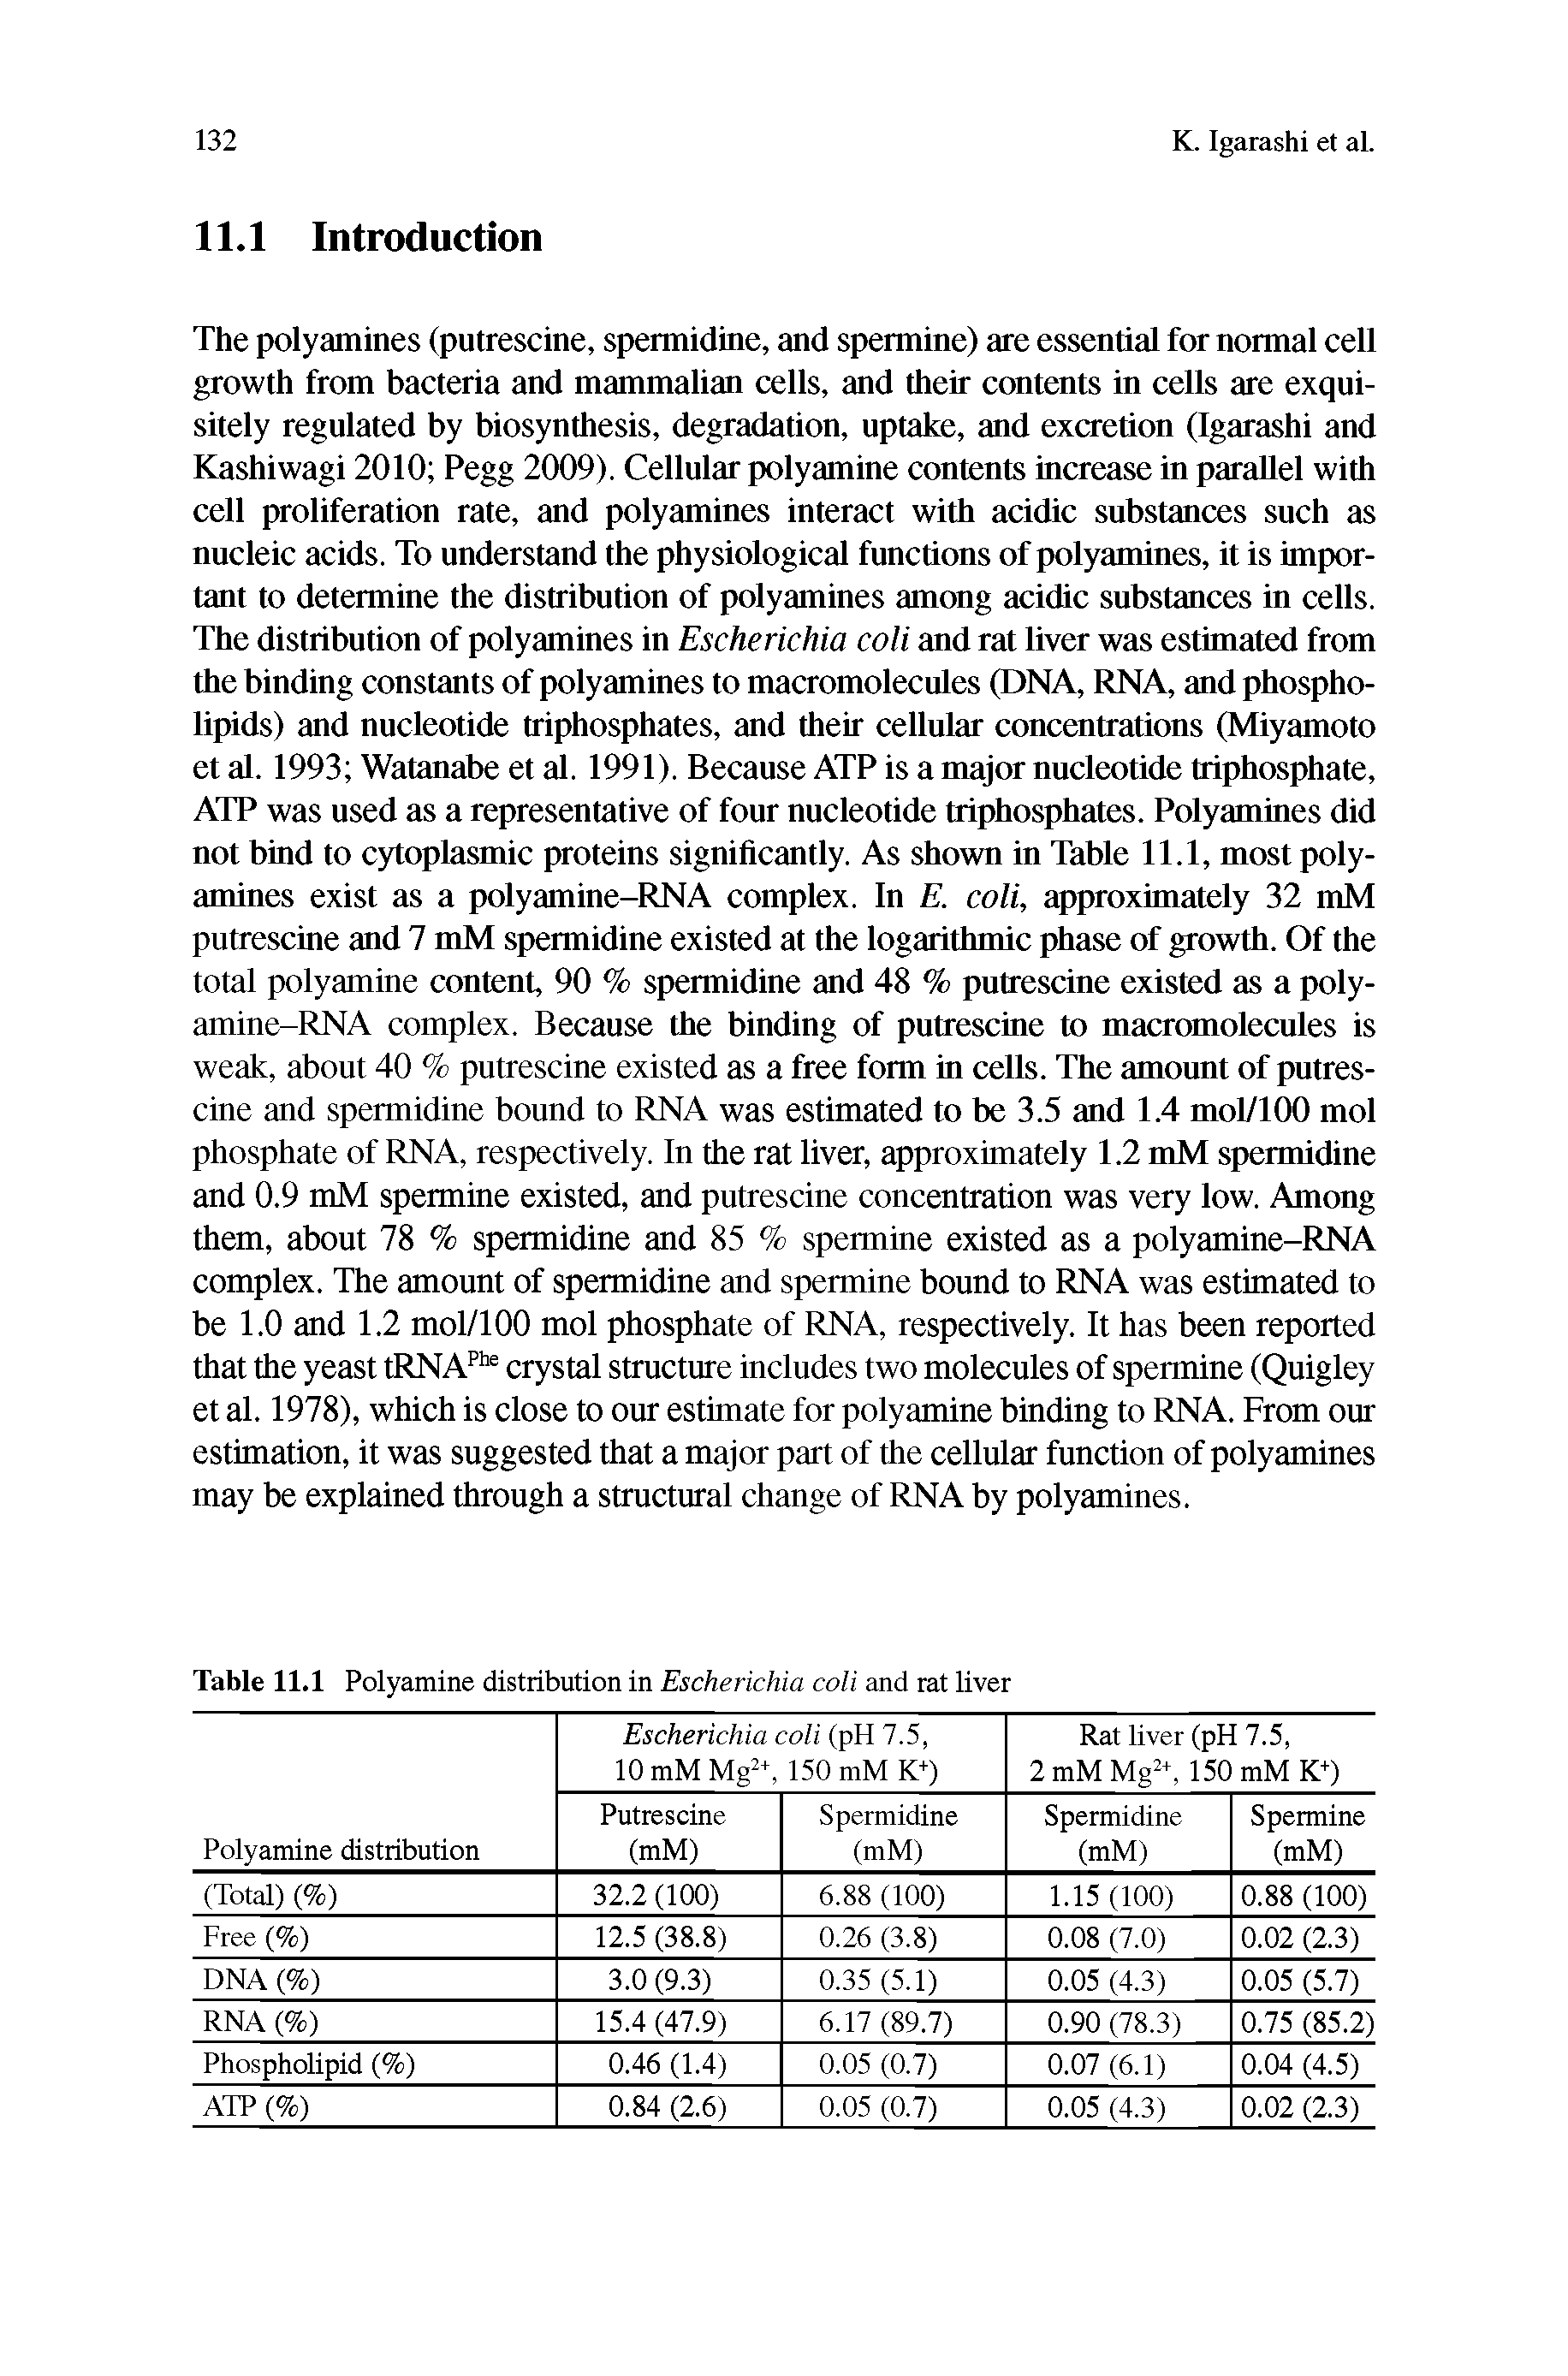 Table 11.1 Polyamine distribution in Escherichia coli and rat liver...